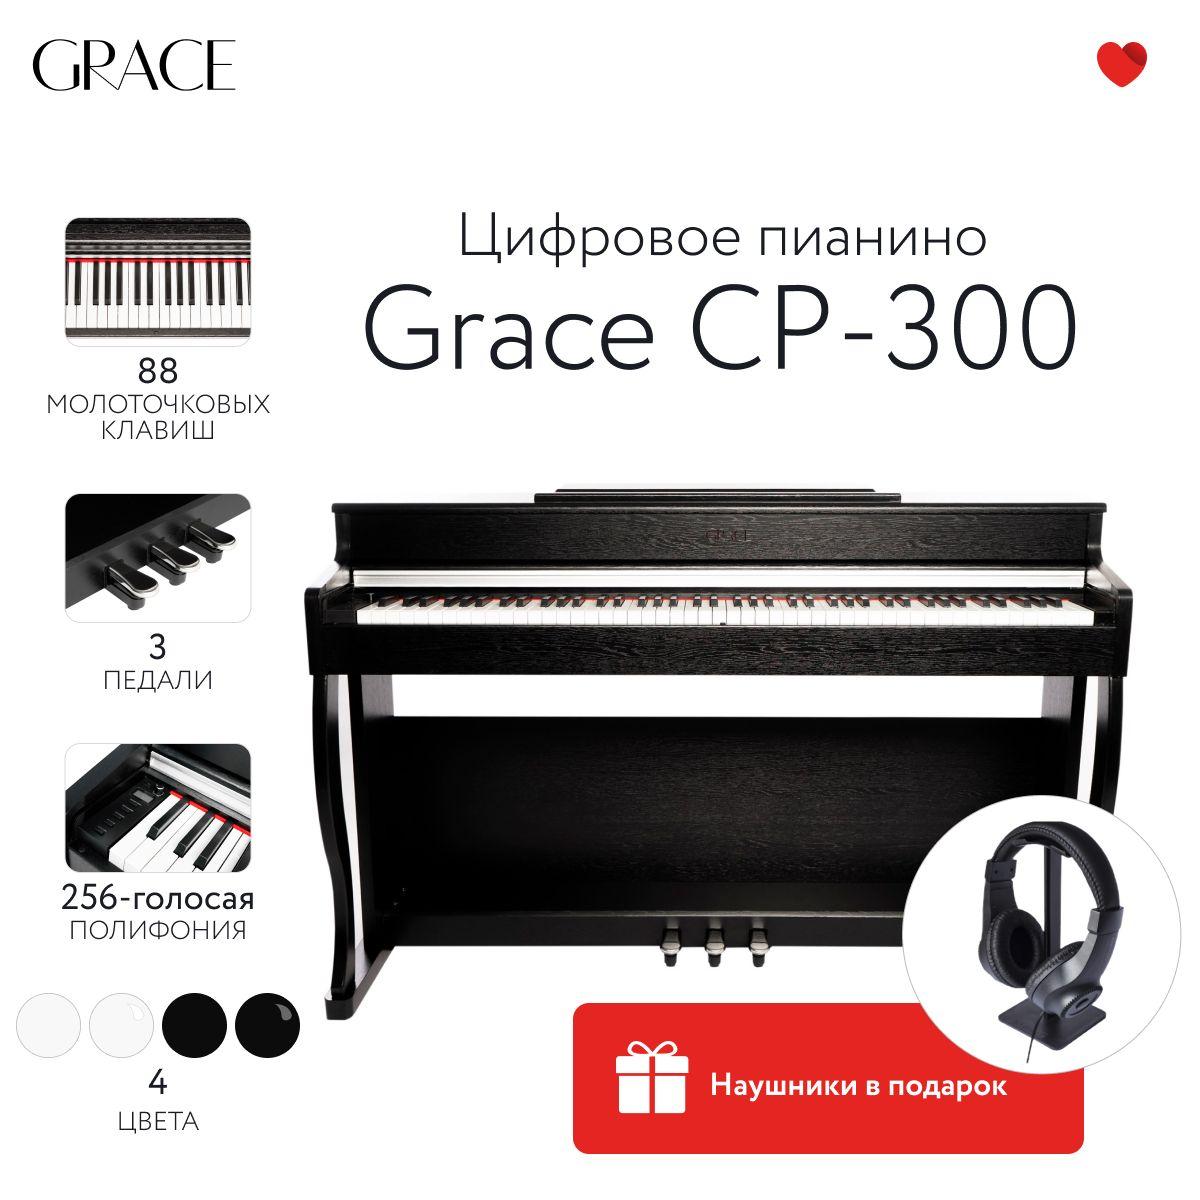 Grace CP-300 BK - Цифровое пианино в корпусе с тремя педалями